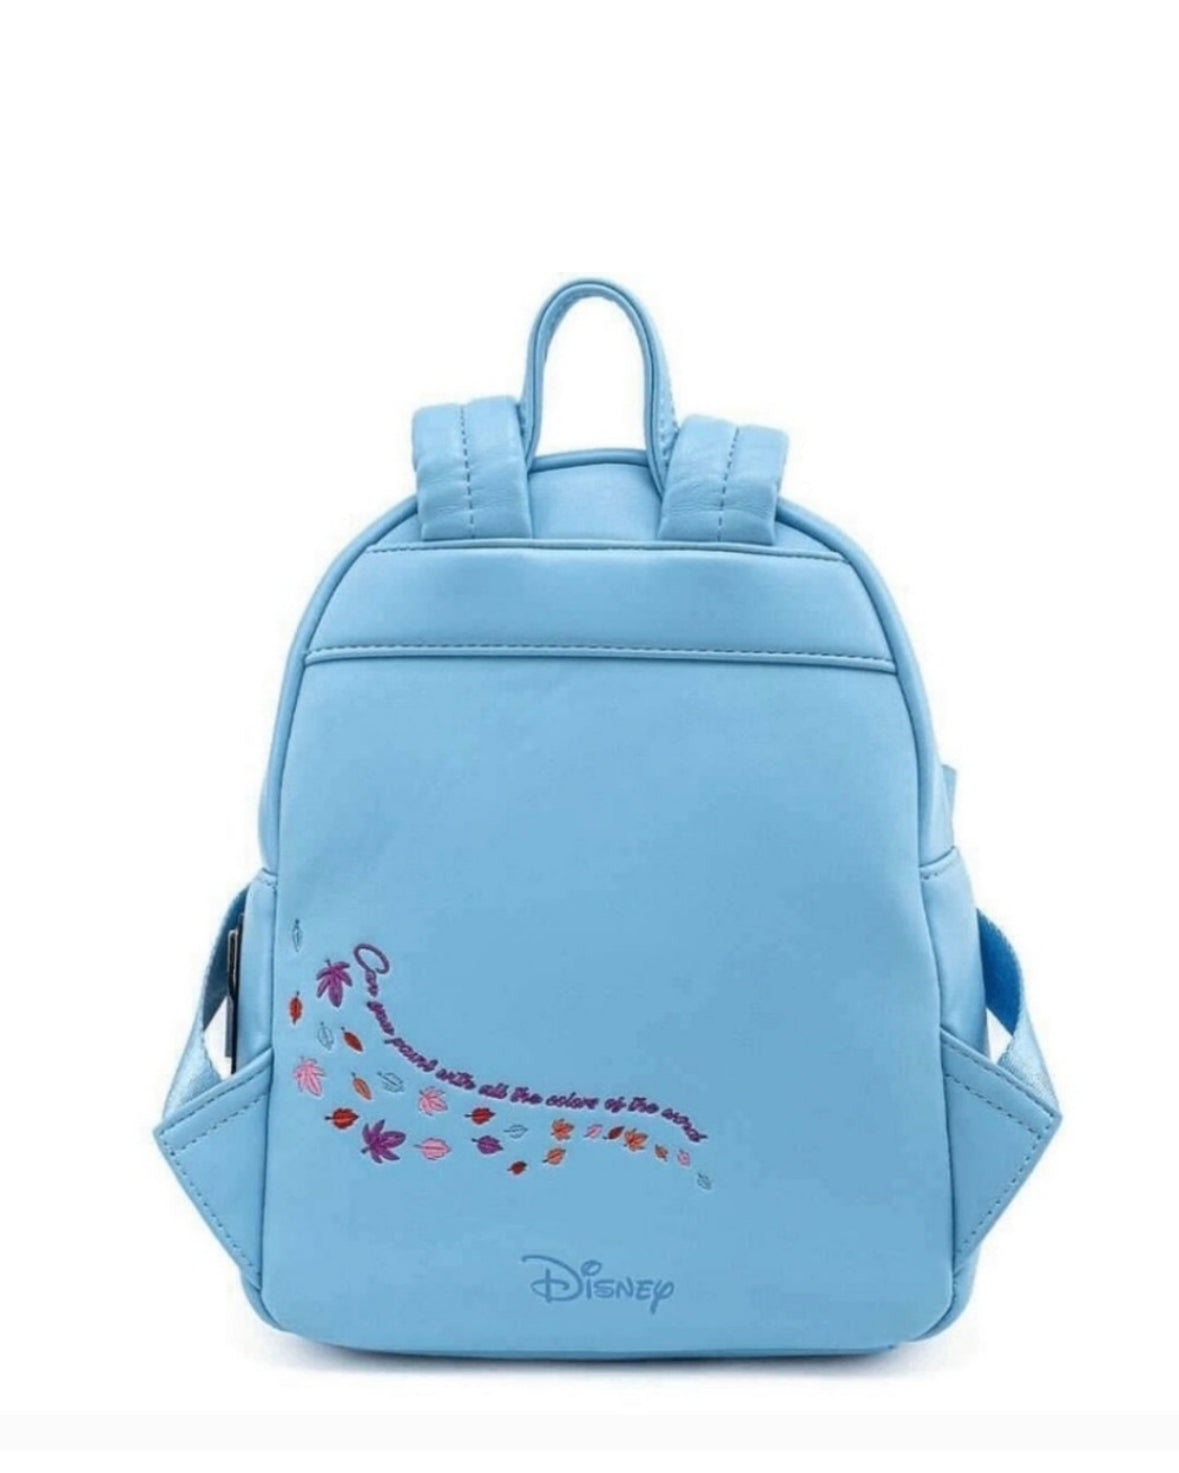 Disney - Pocahontas Meeko Flit Earth Day Mini Backpack